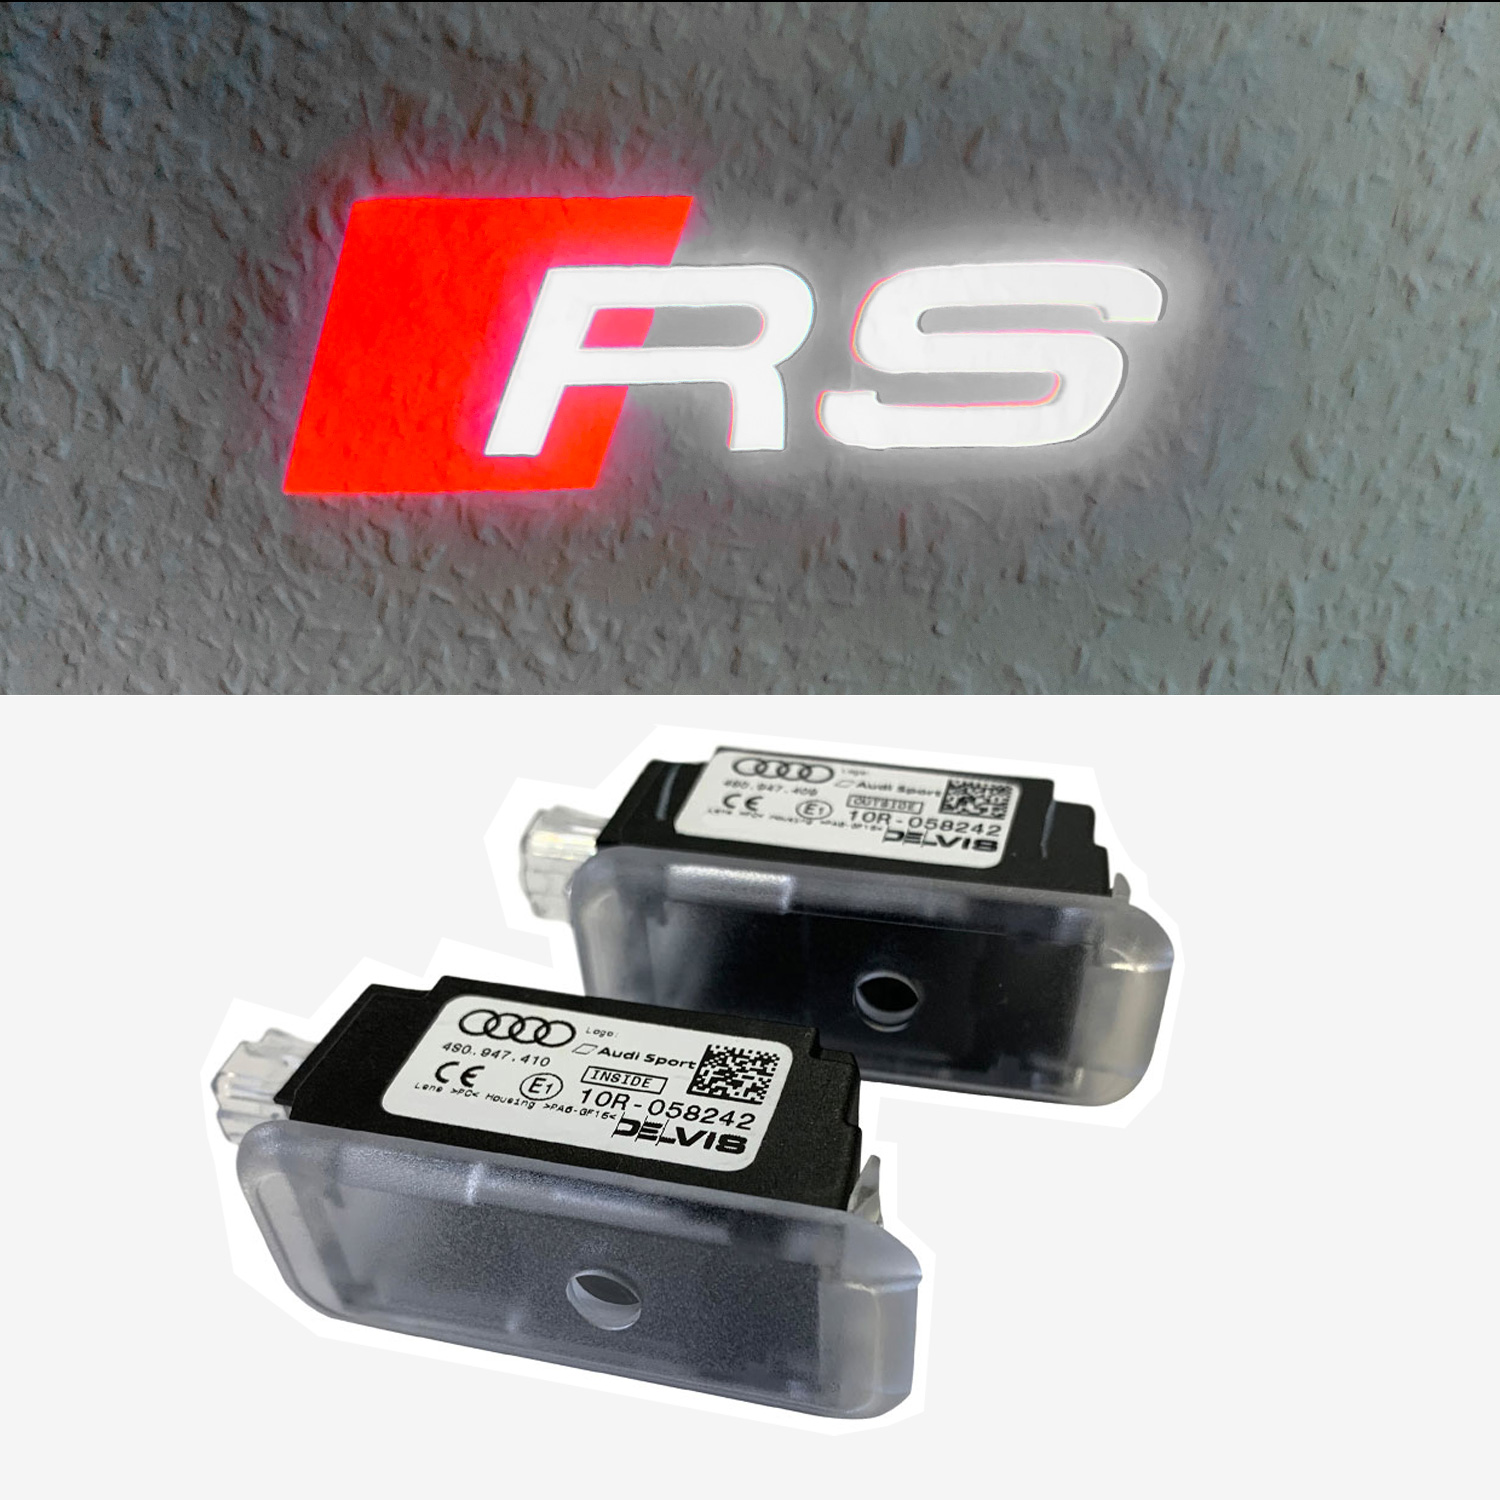 Audi Original LED Projektor links Audi Sport Einstiegsbeleuchtung  Türbeleuchtung